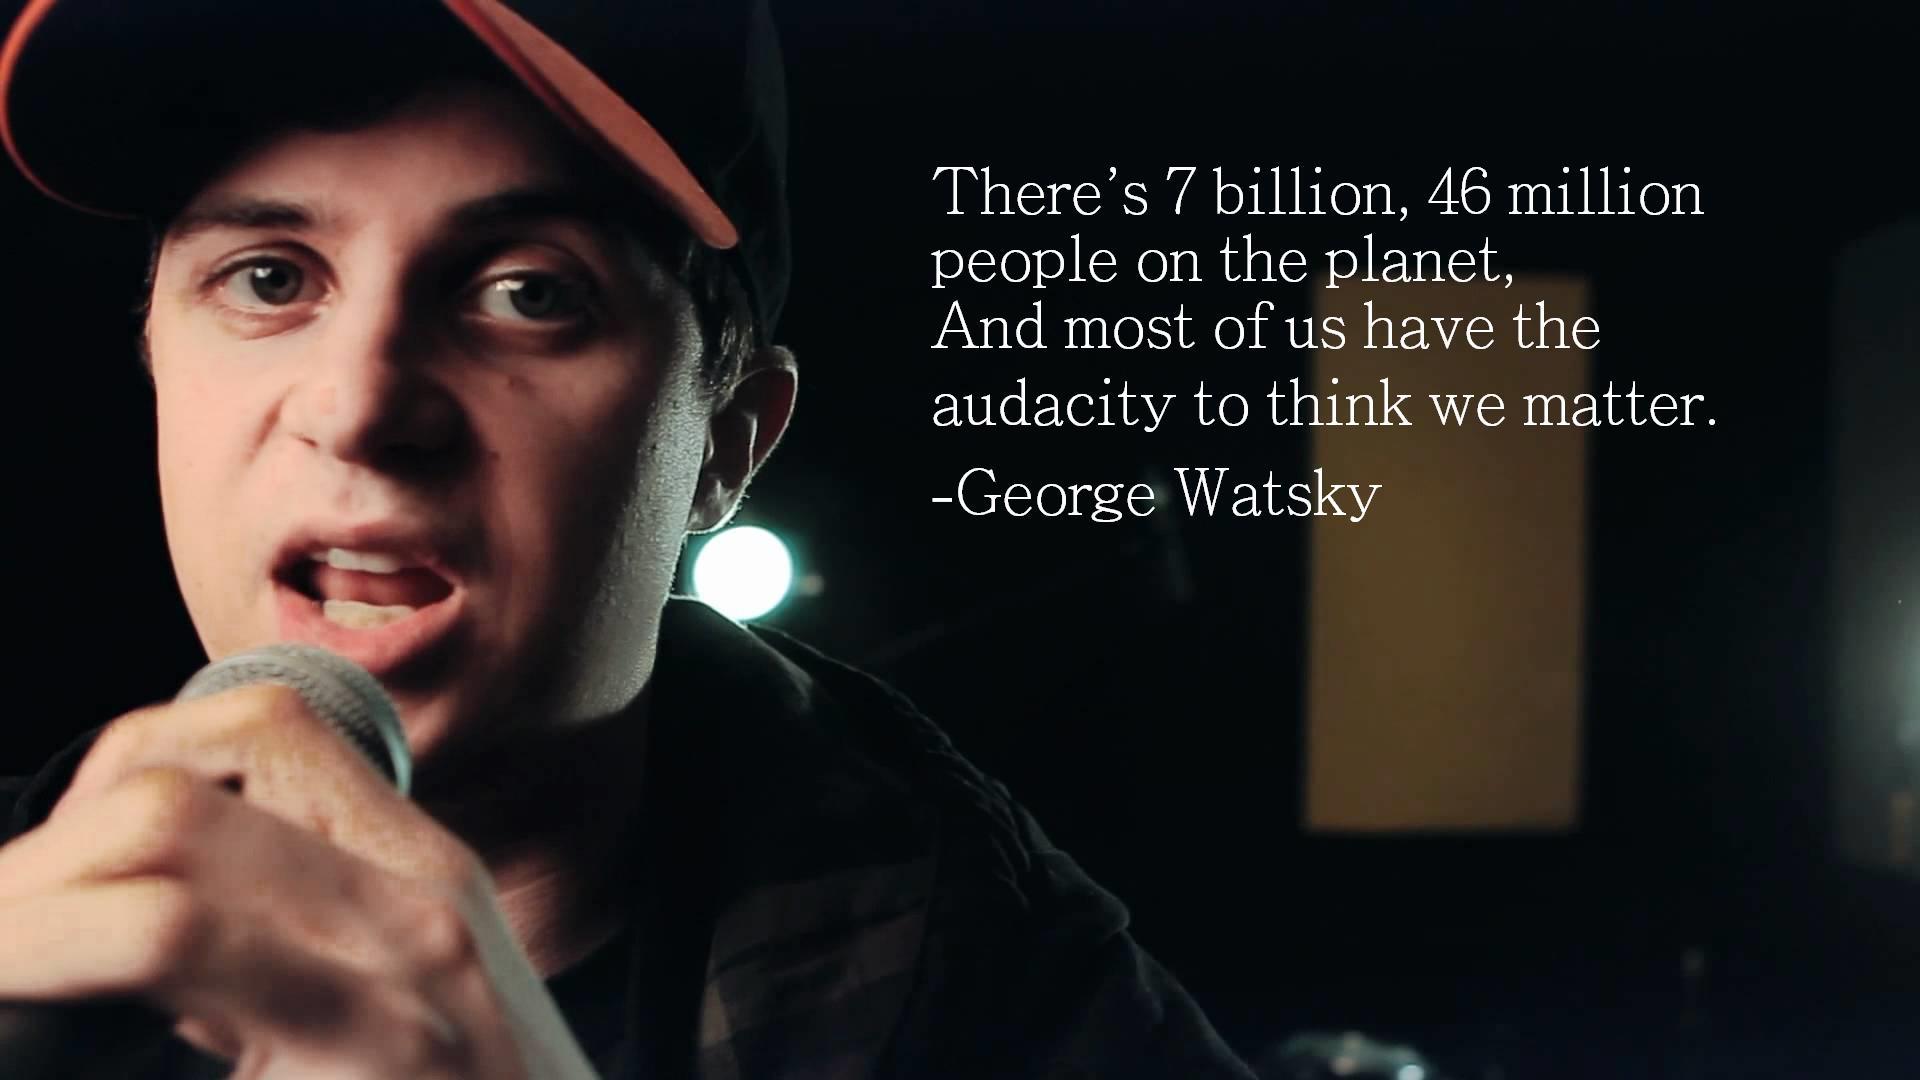 YouTube Sensation George Watsky and Rapper